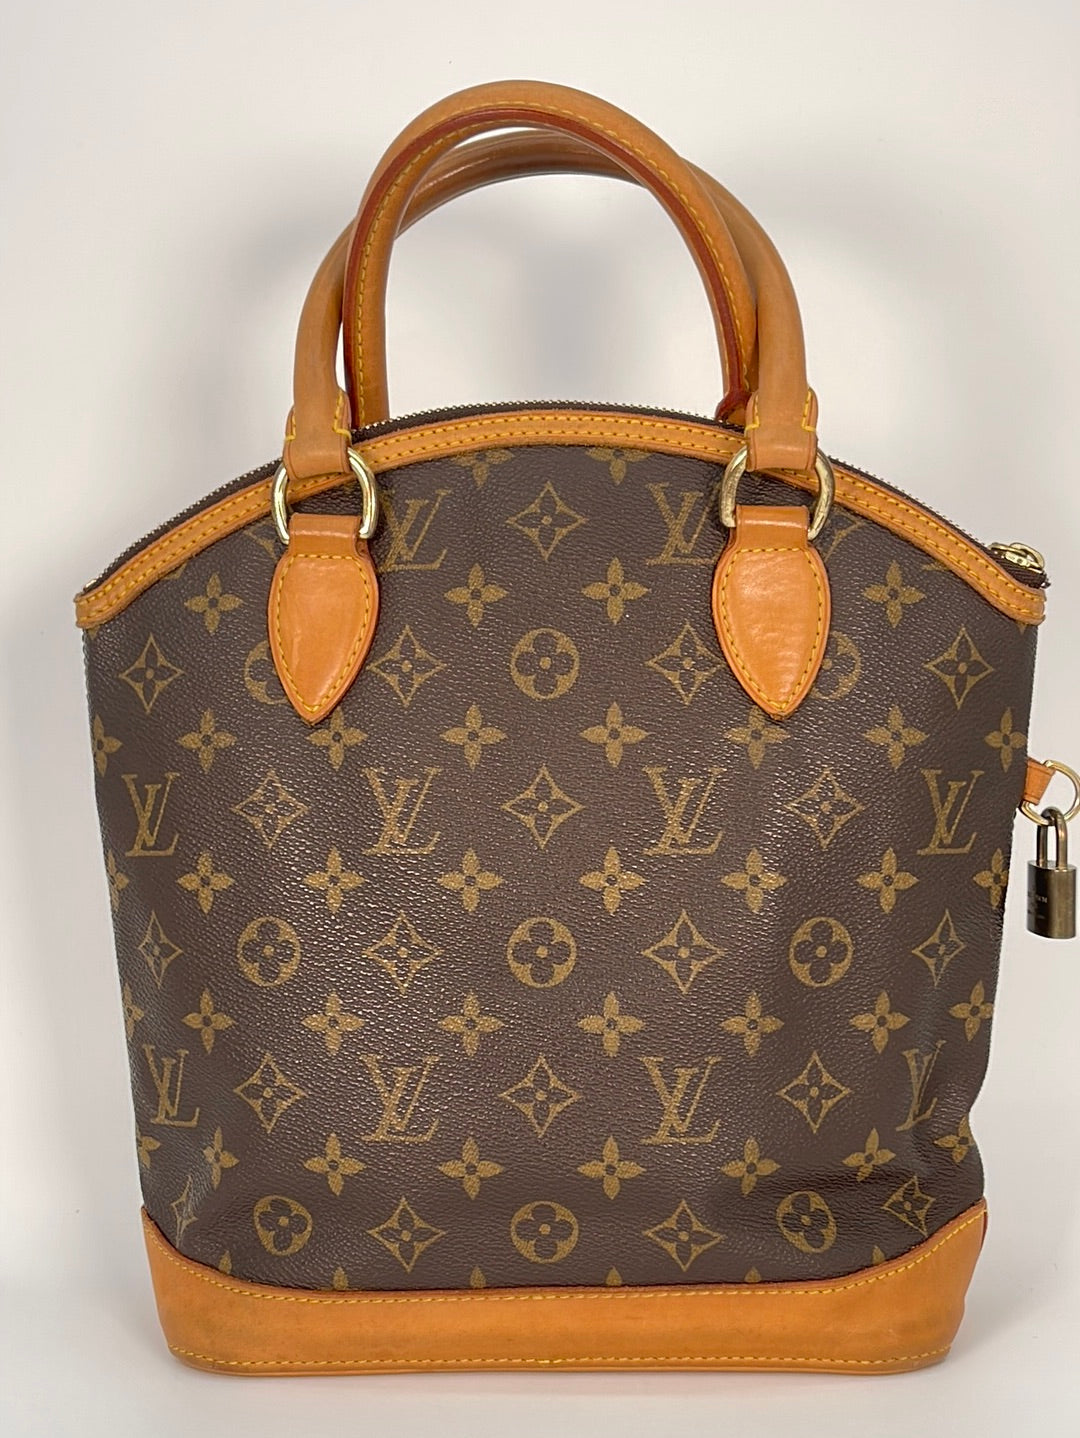 Louis Vuitton Lockit Handbag in Black Monogram Canvas and Red Patent